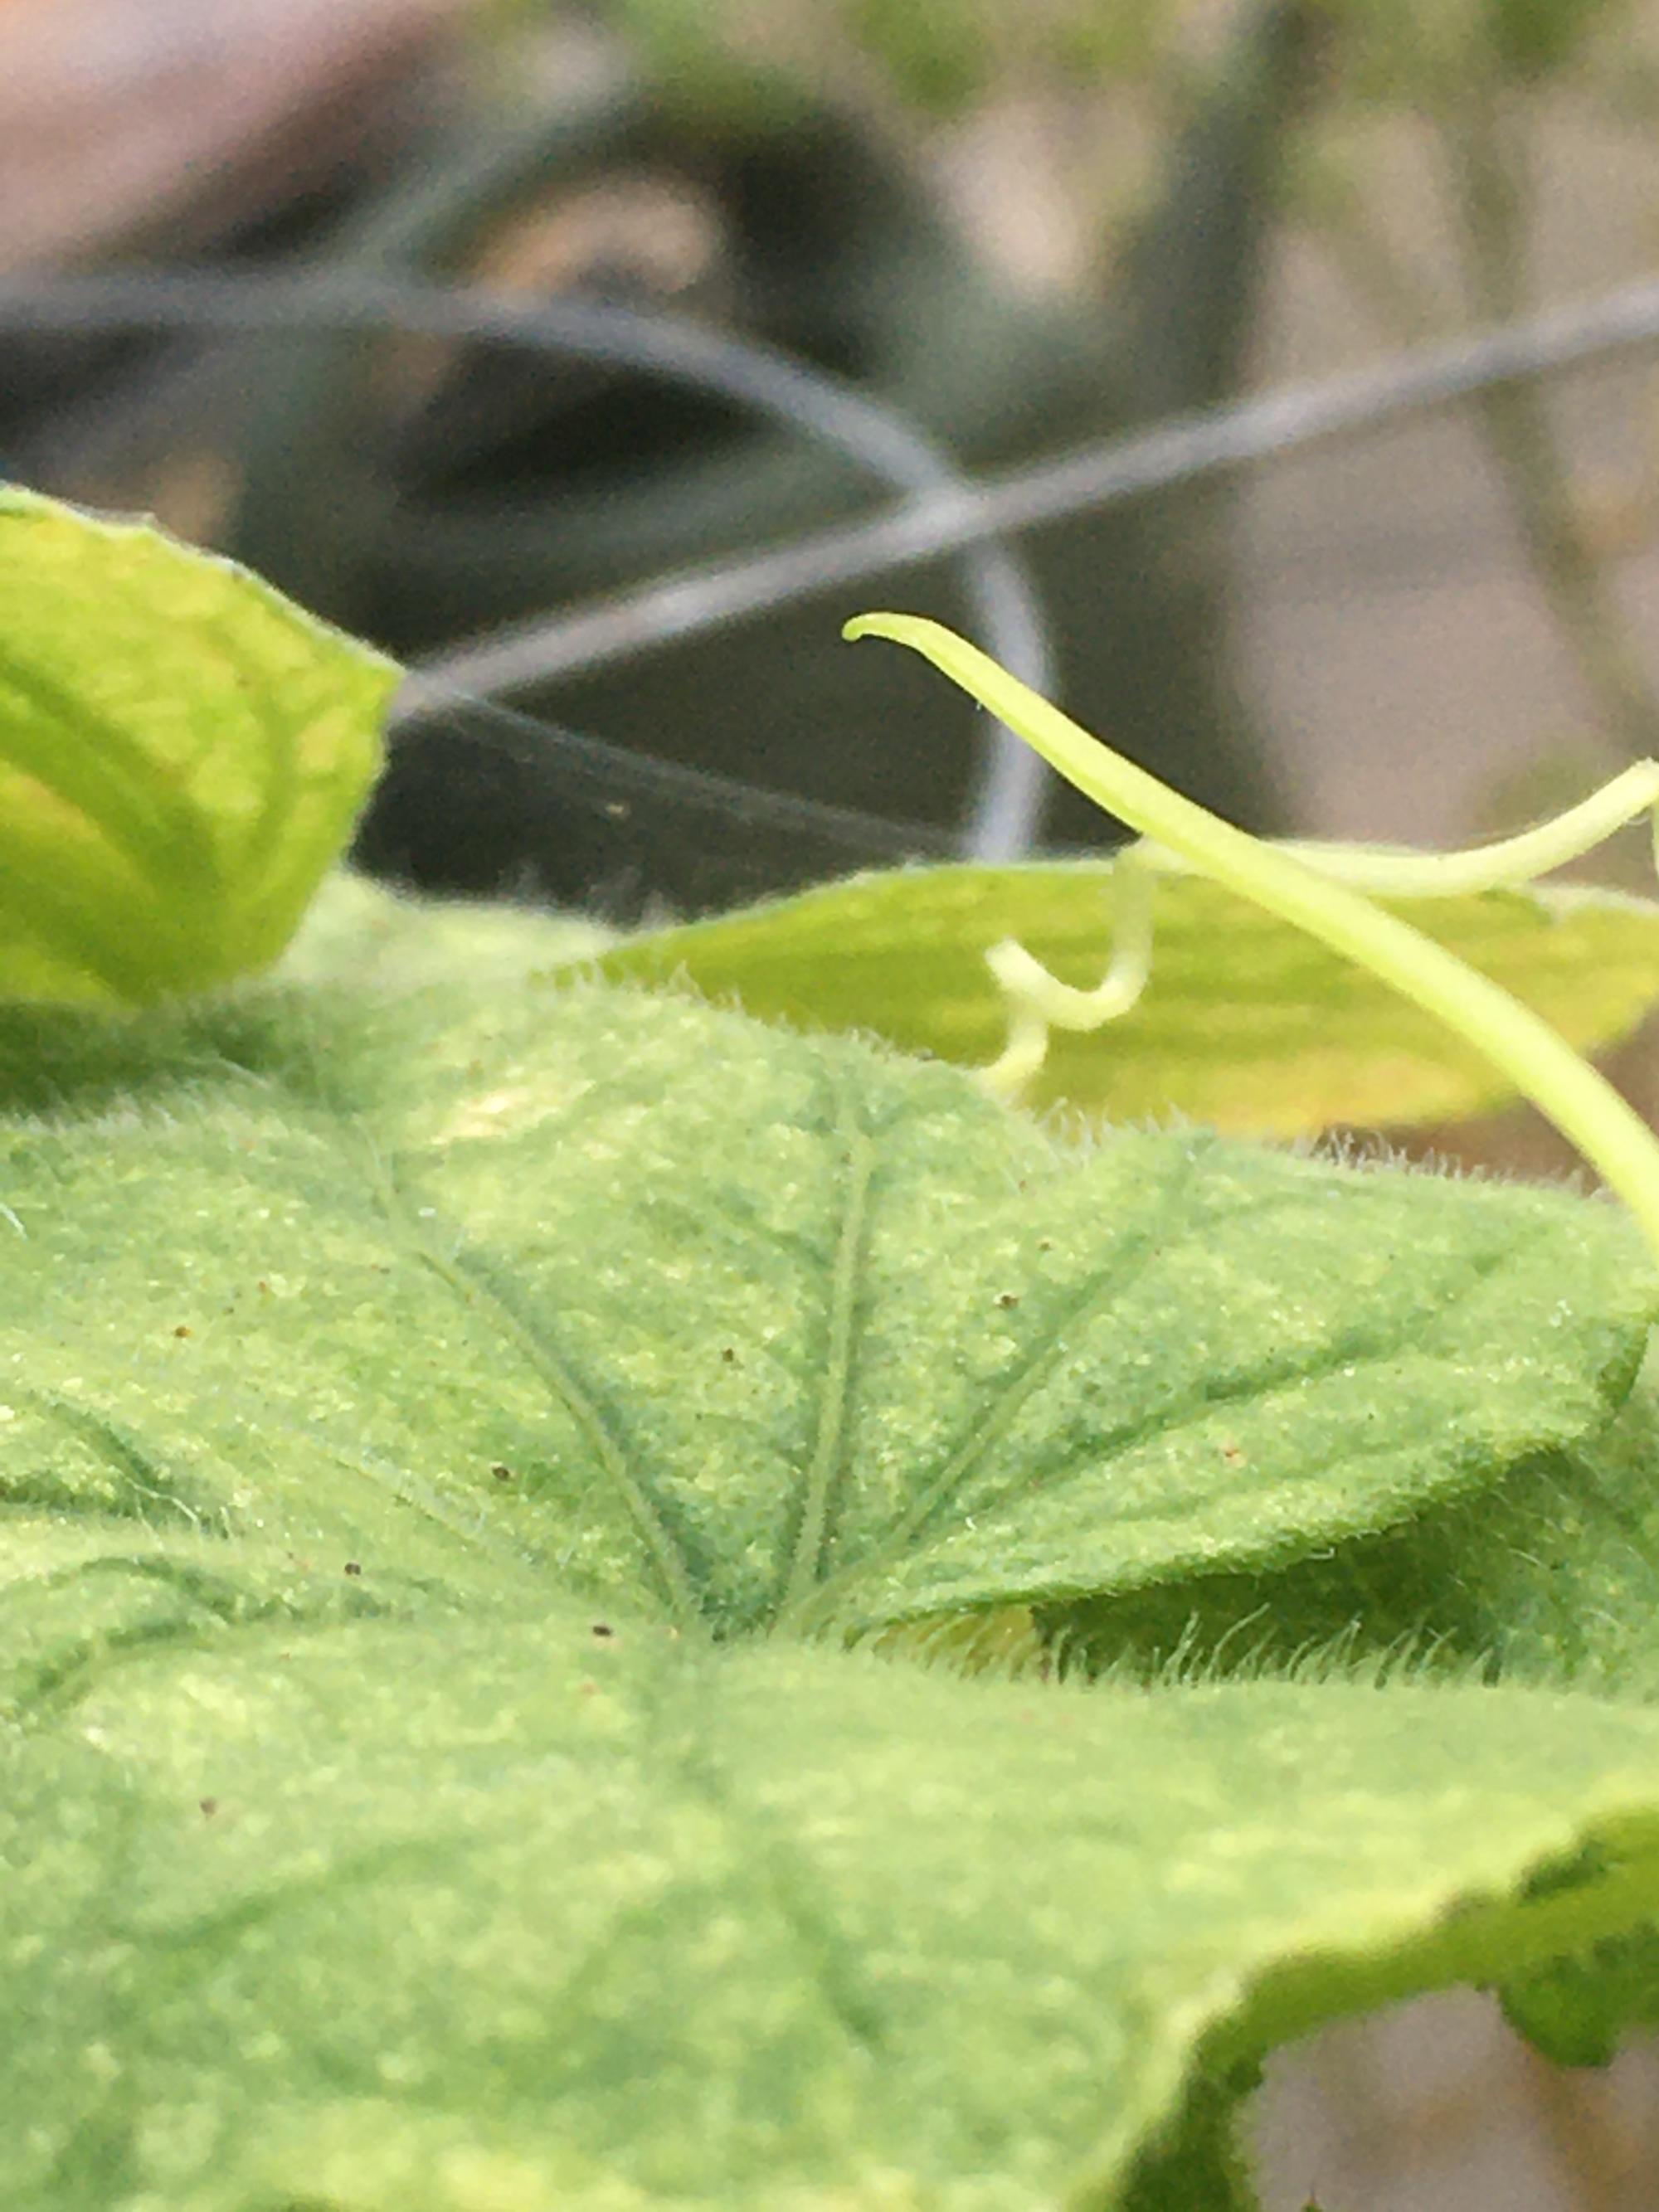 webbing on cucumber leaves